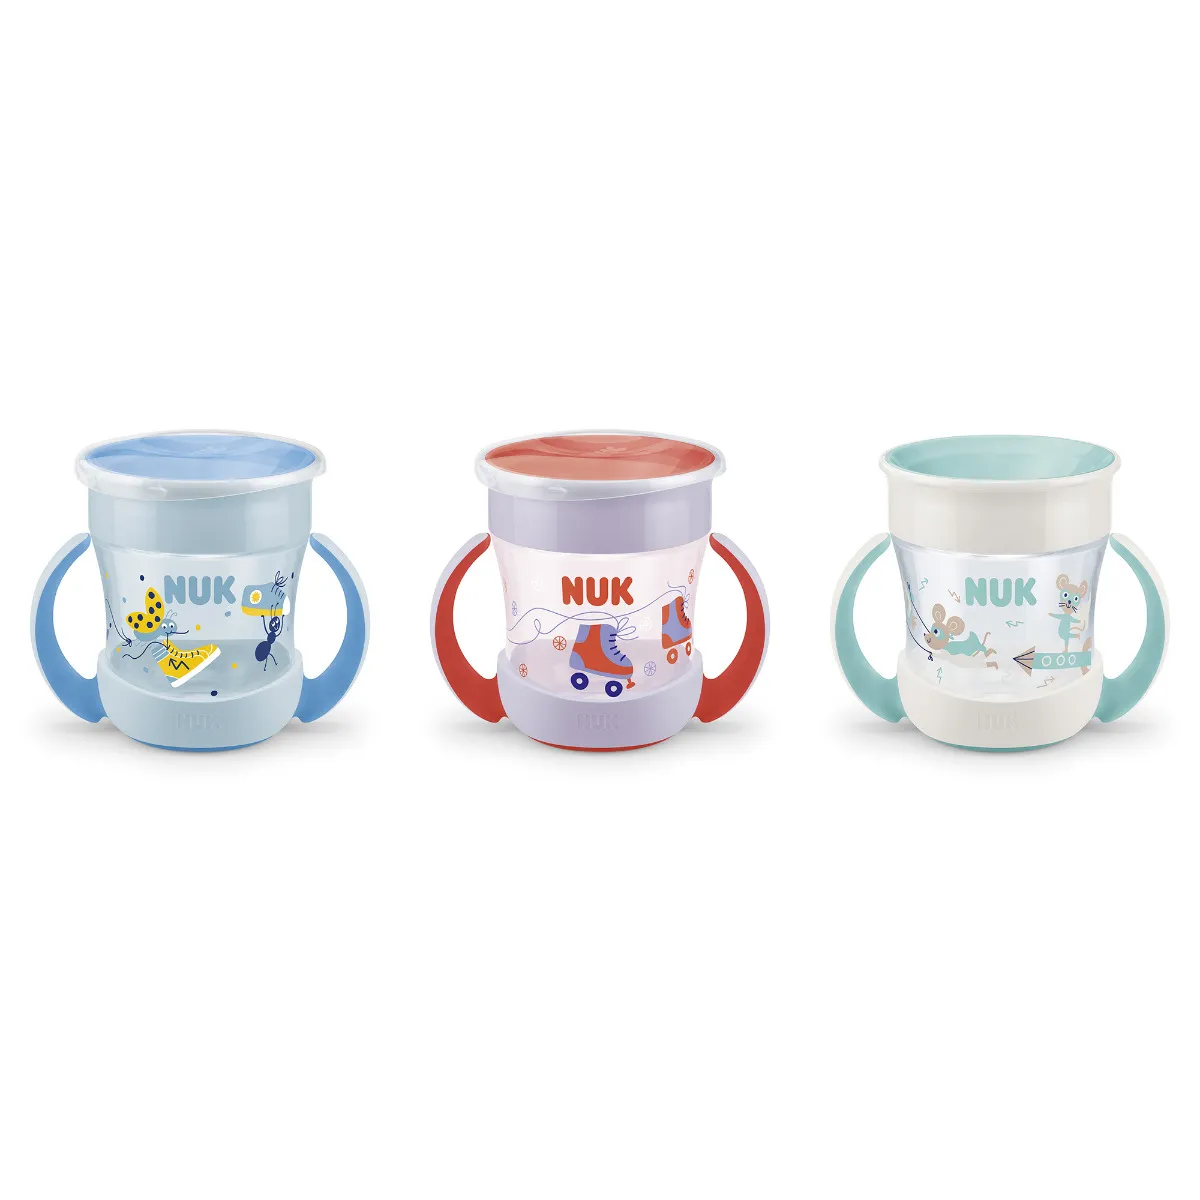 NUK hrnček Mini Magic Cup 1×1 ks, detský hrnček 160 ml